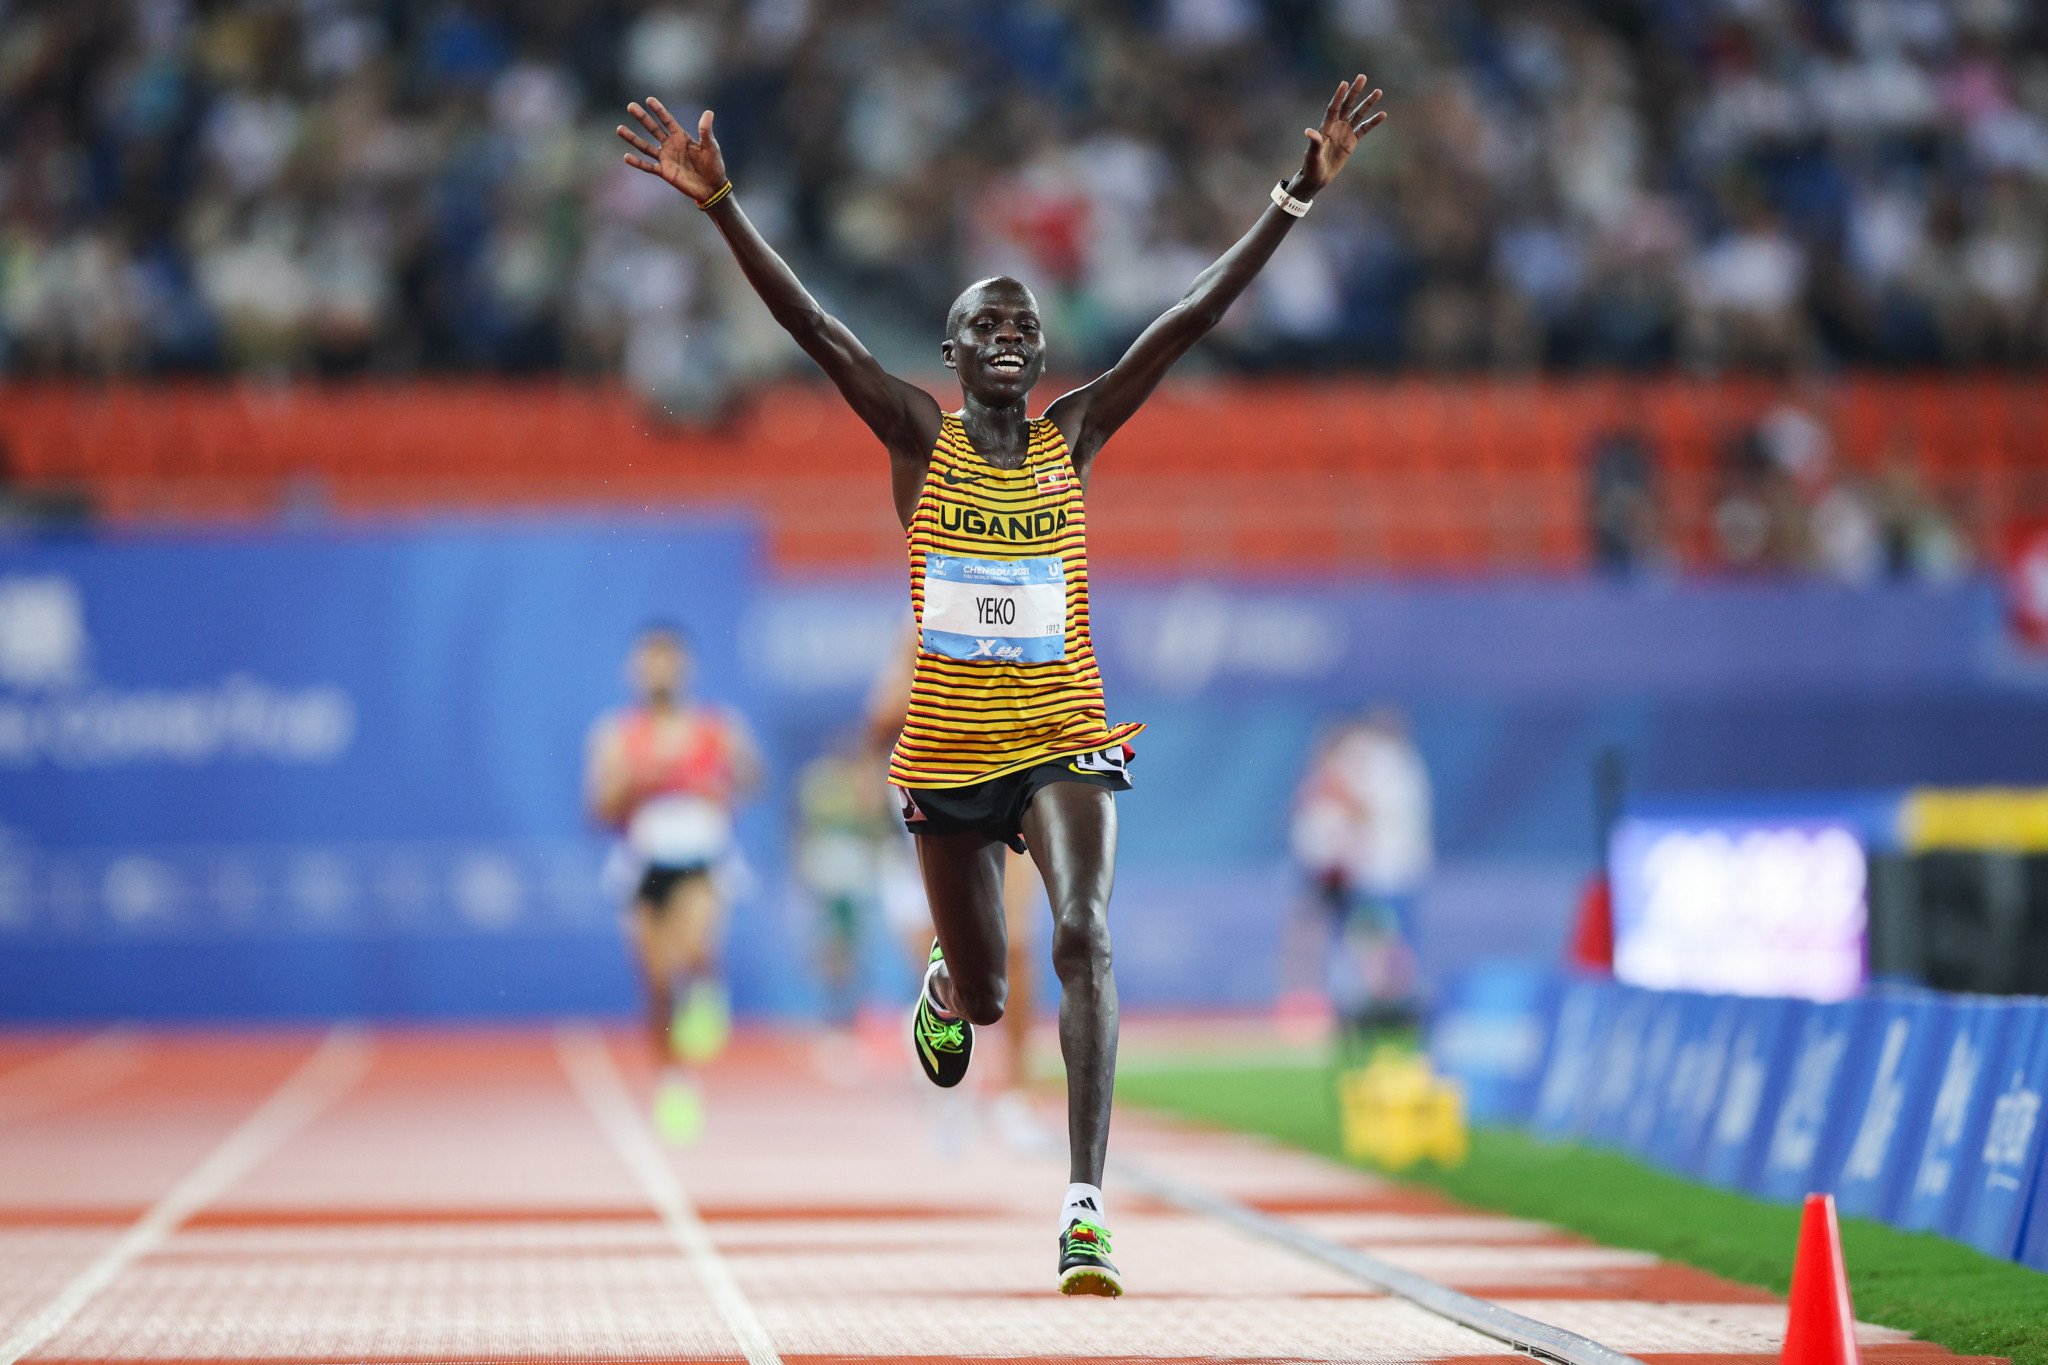 Dismas Yeko surged to men's 10,000m gold to win Uganda's first medal of the Games ©Chengdu 2021